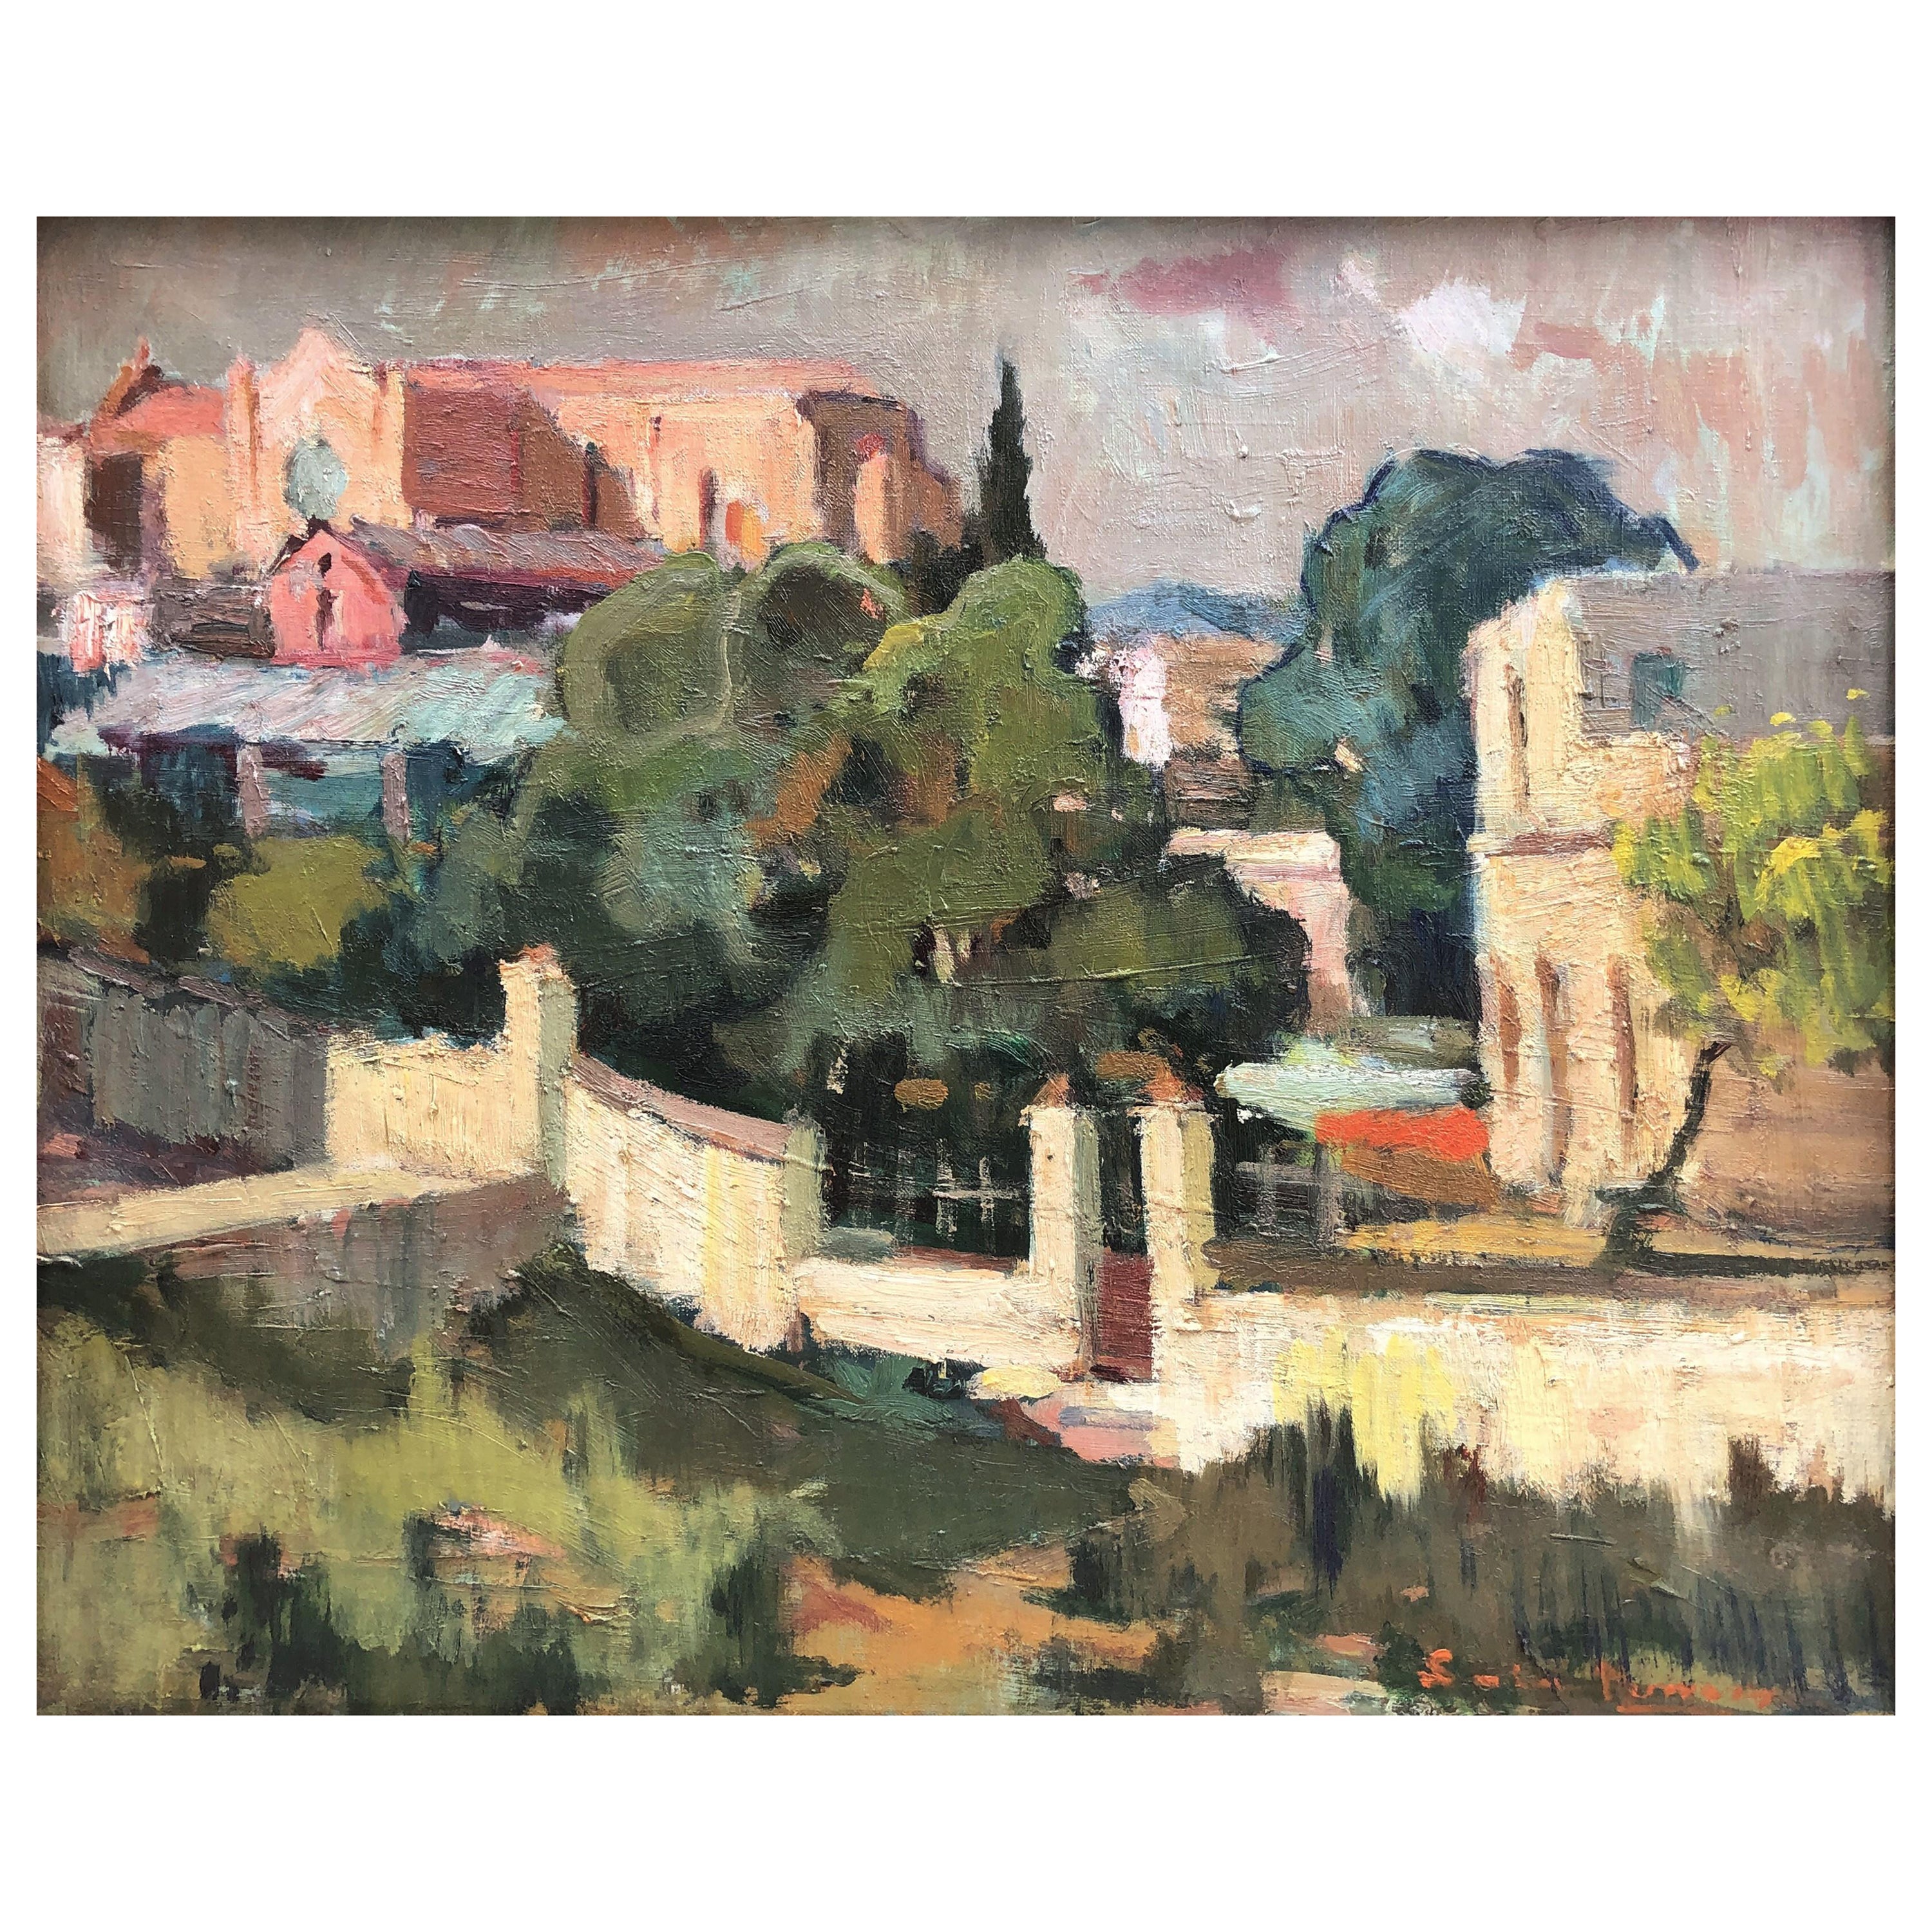 Antonio Sala Herrero Landscape Painting - Barcelona Spain oil on canvas painting landscape urbanscape